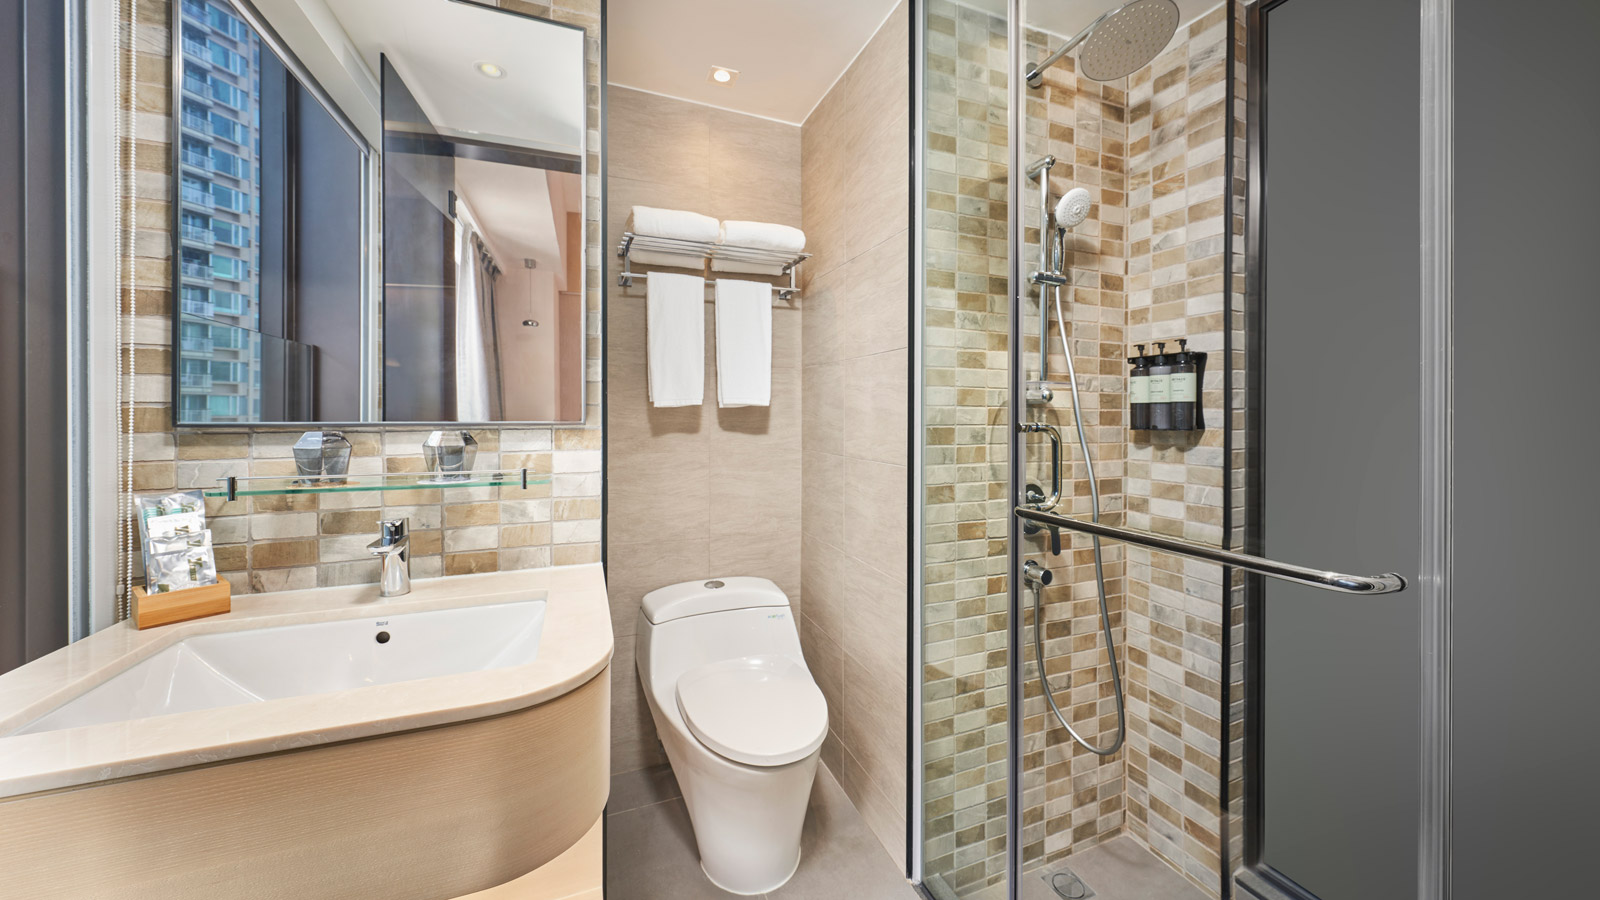 Superior Twin - Bathroom - Y Hotel Hong Kong (Images are a visual preview and may vary) - Y Hotel Hong Kong